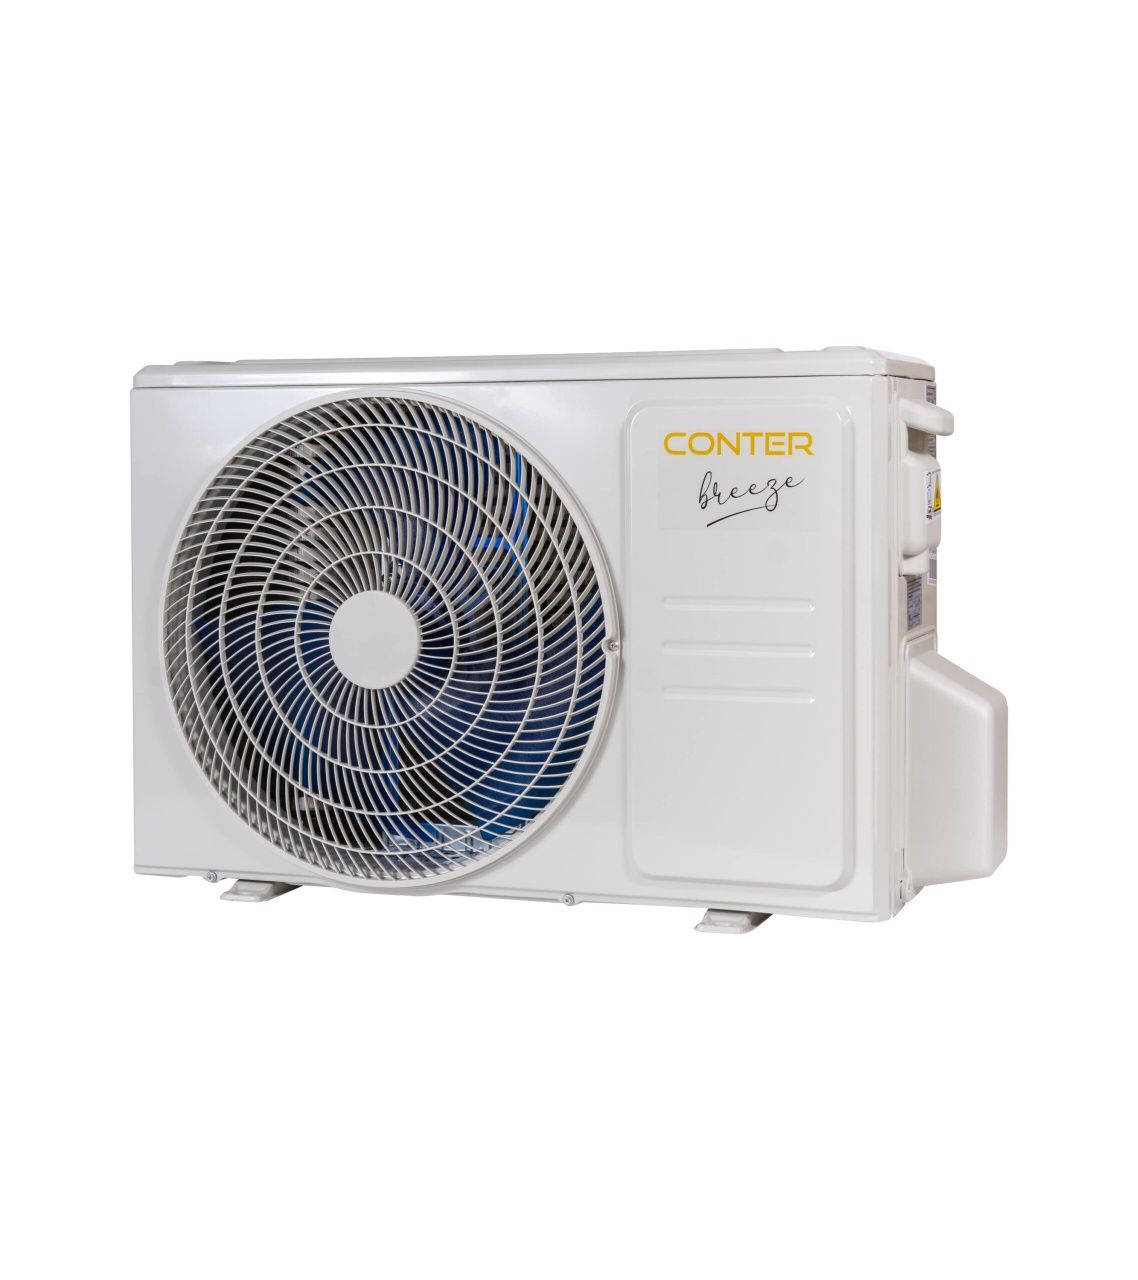 Aer conditionat CONTER BREEZE 12000 BTU  inverter control WiFi